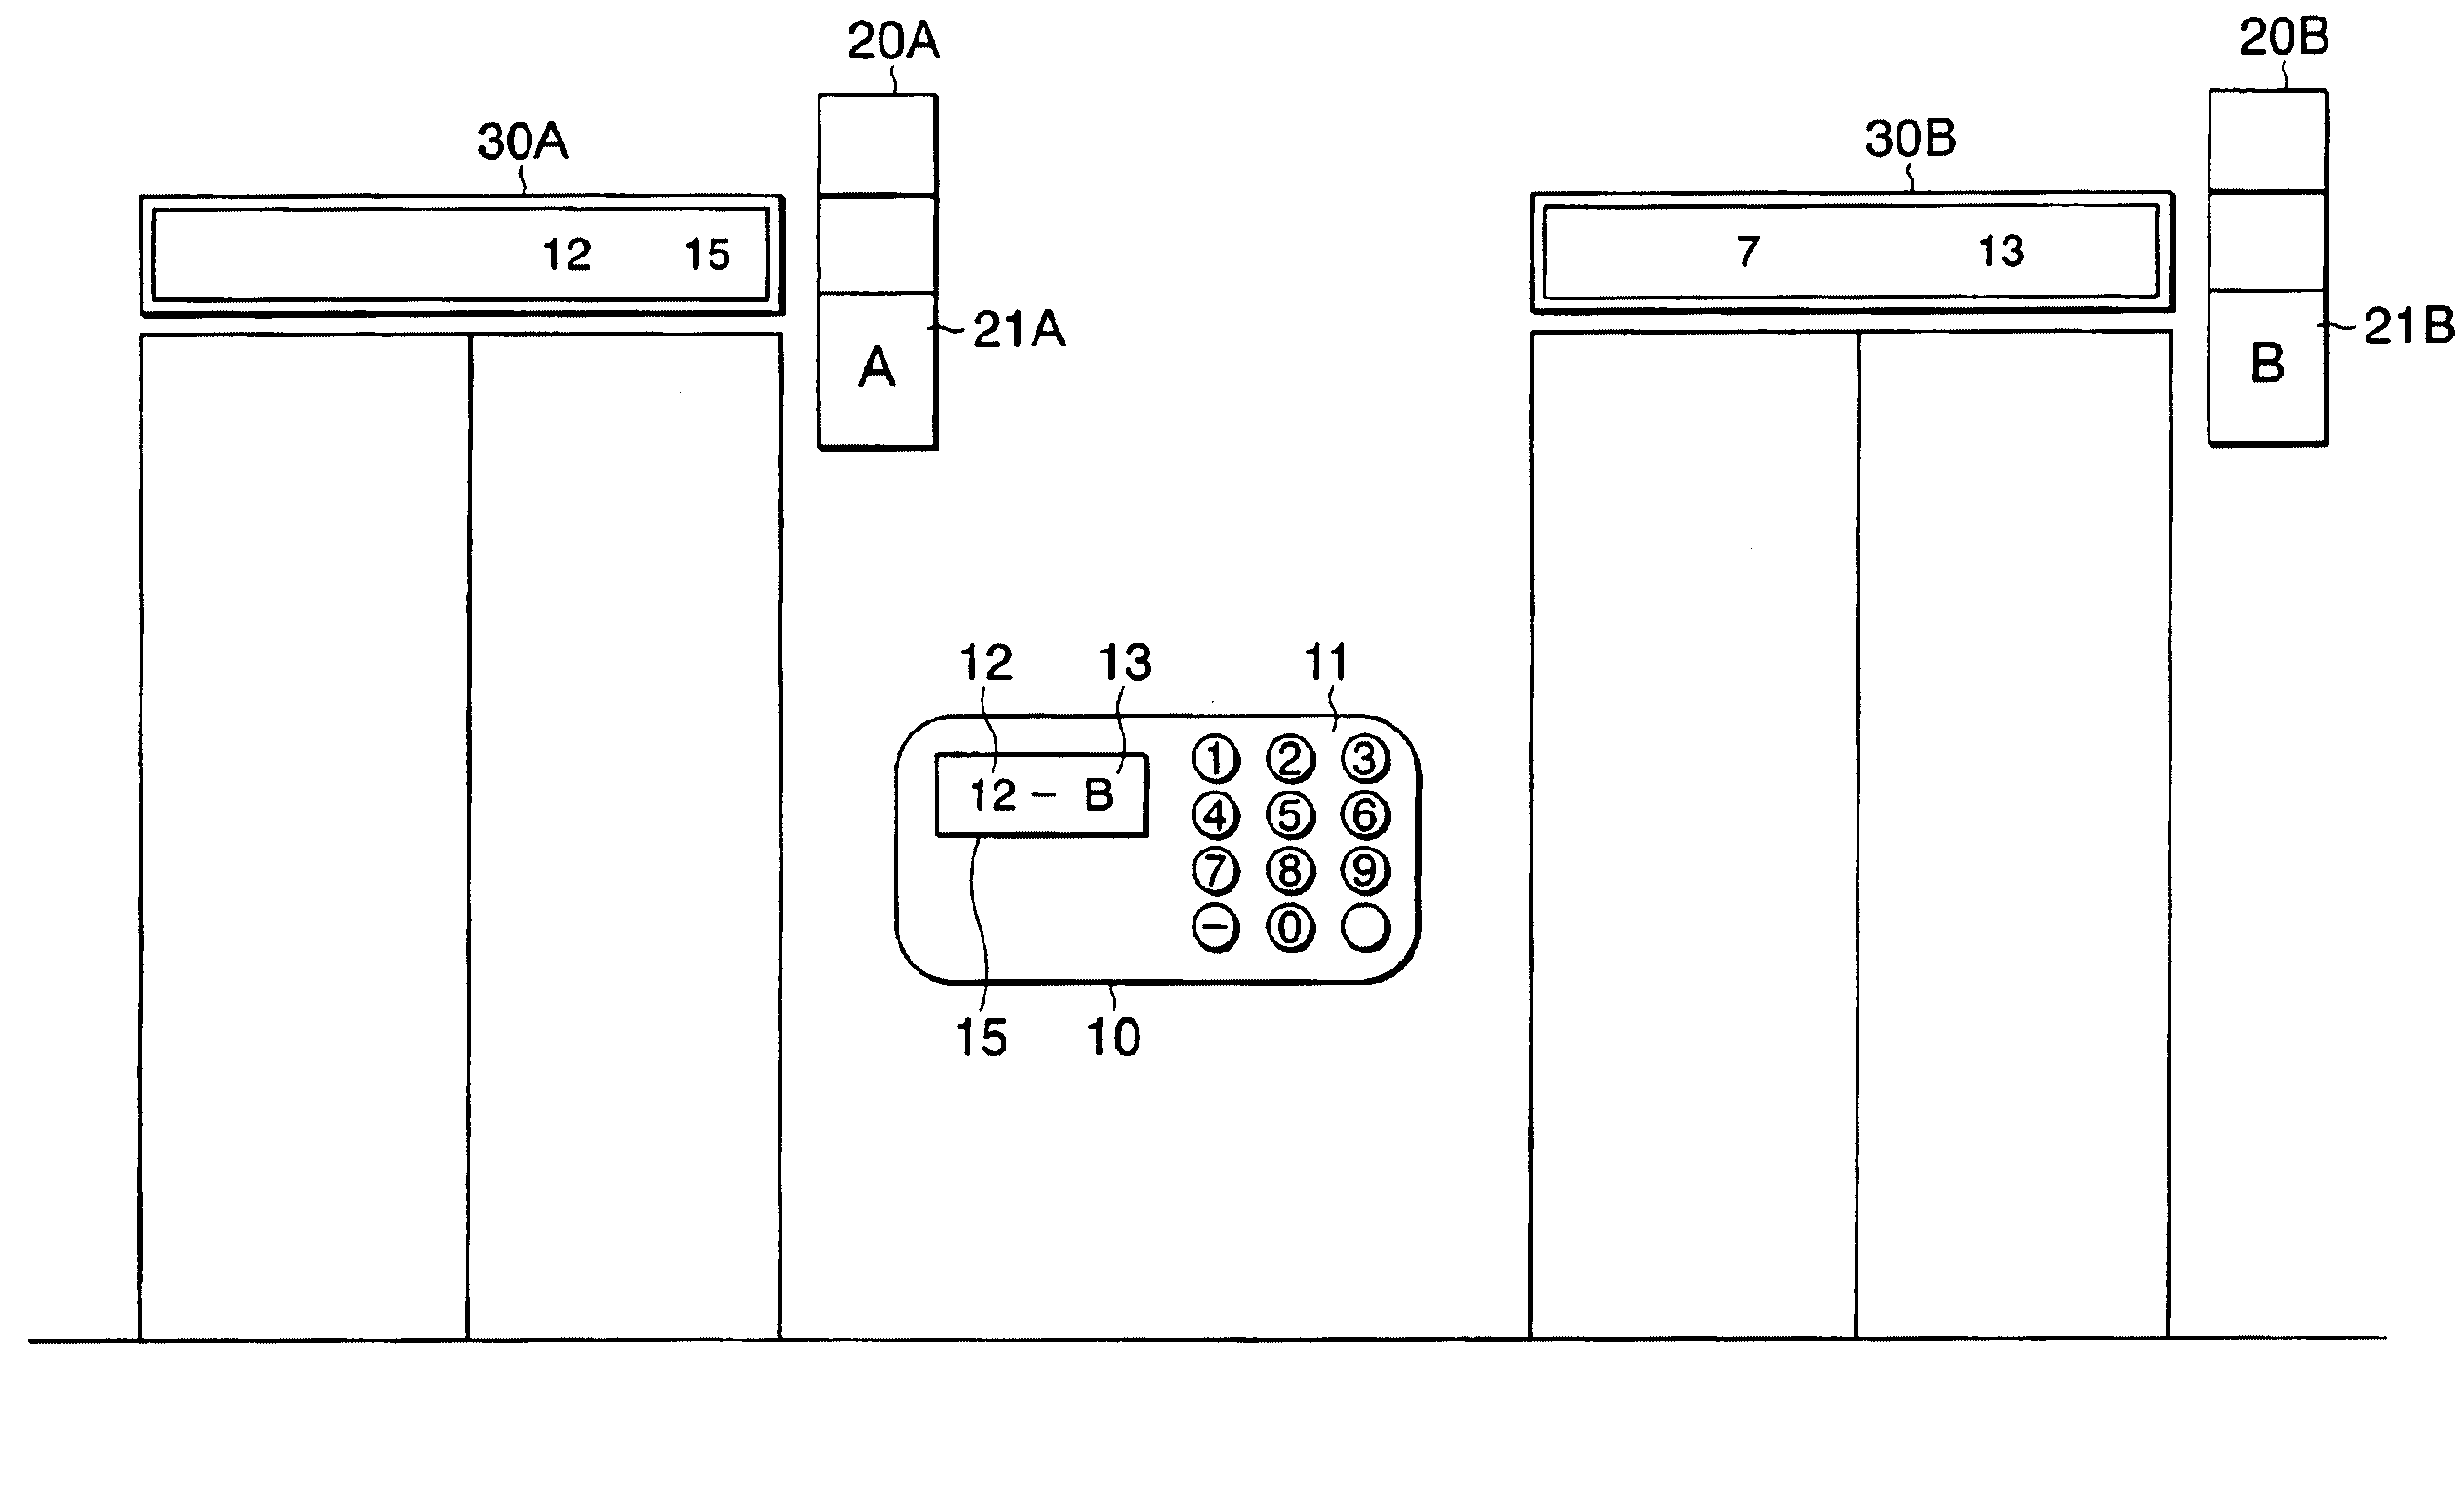 Elevator system indicating assigned car